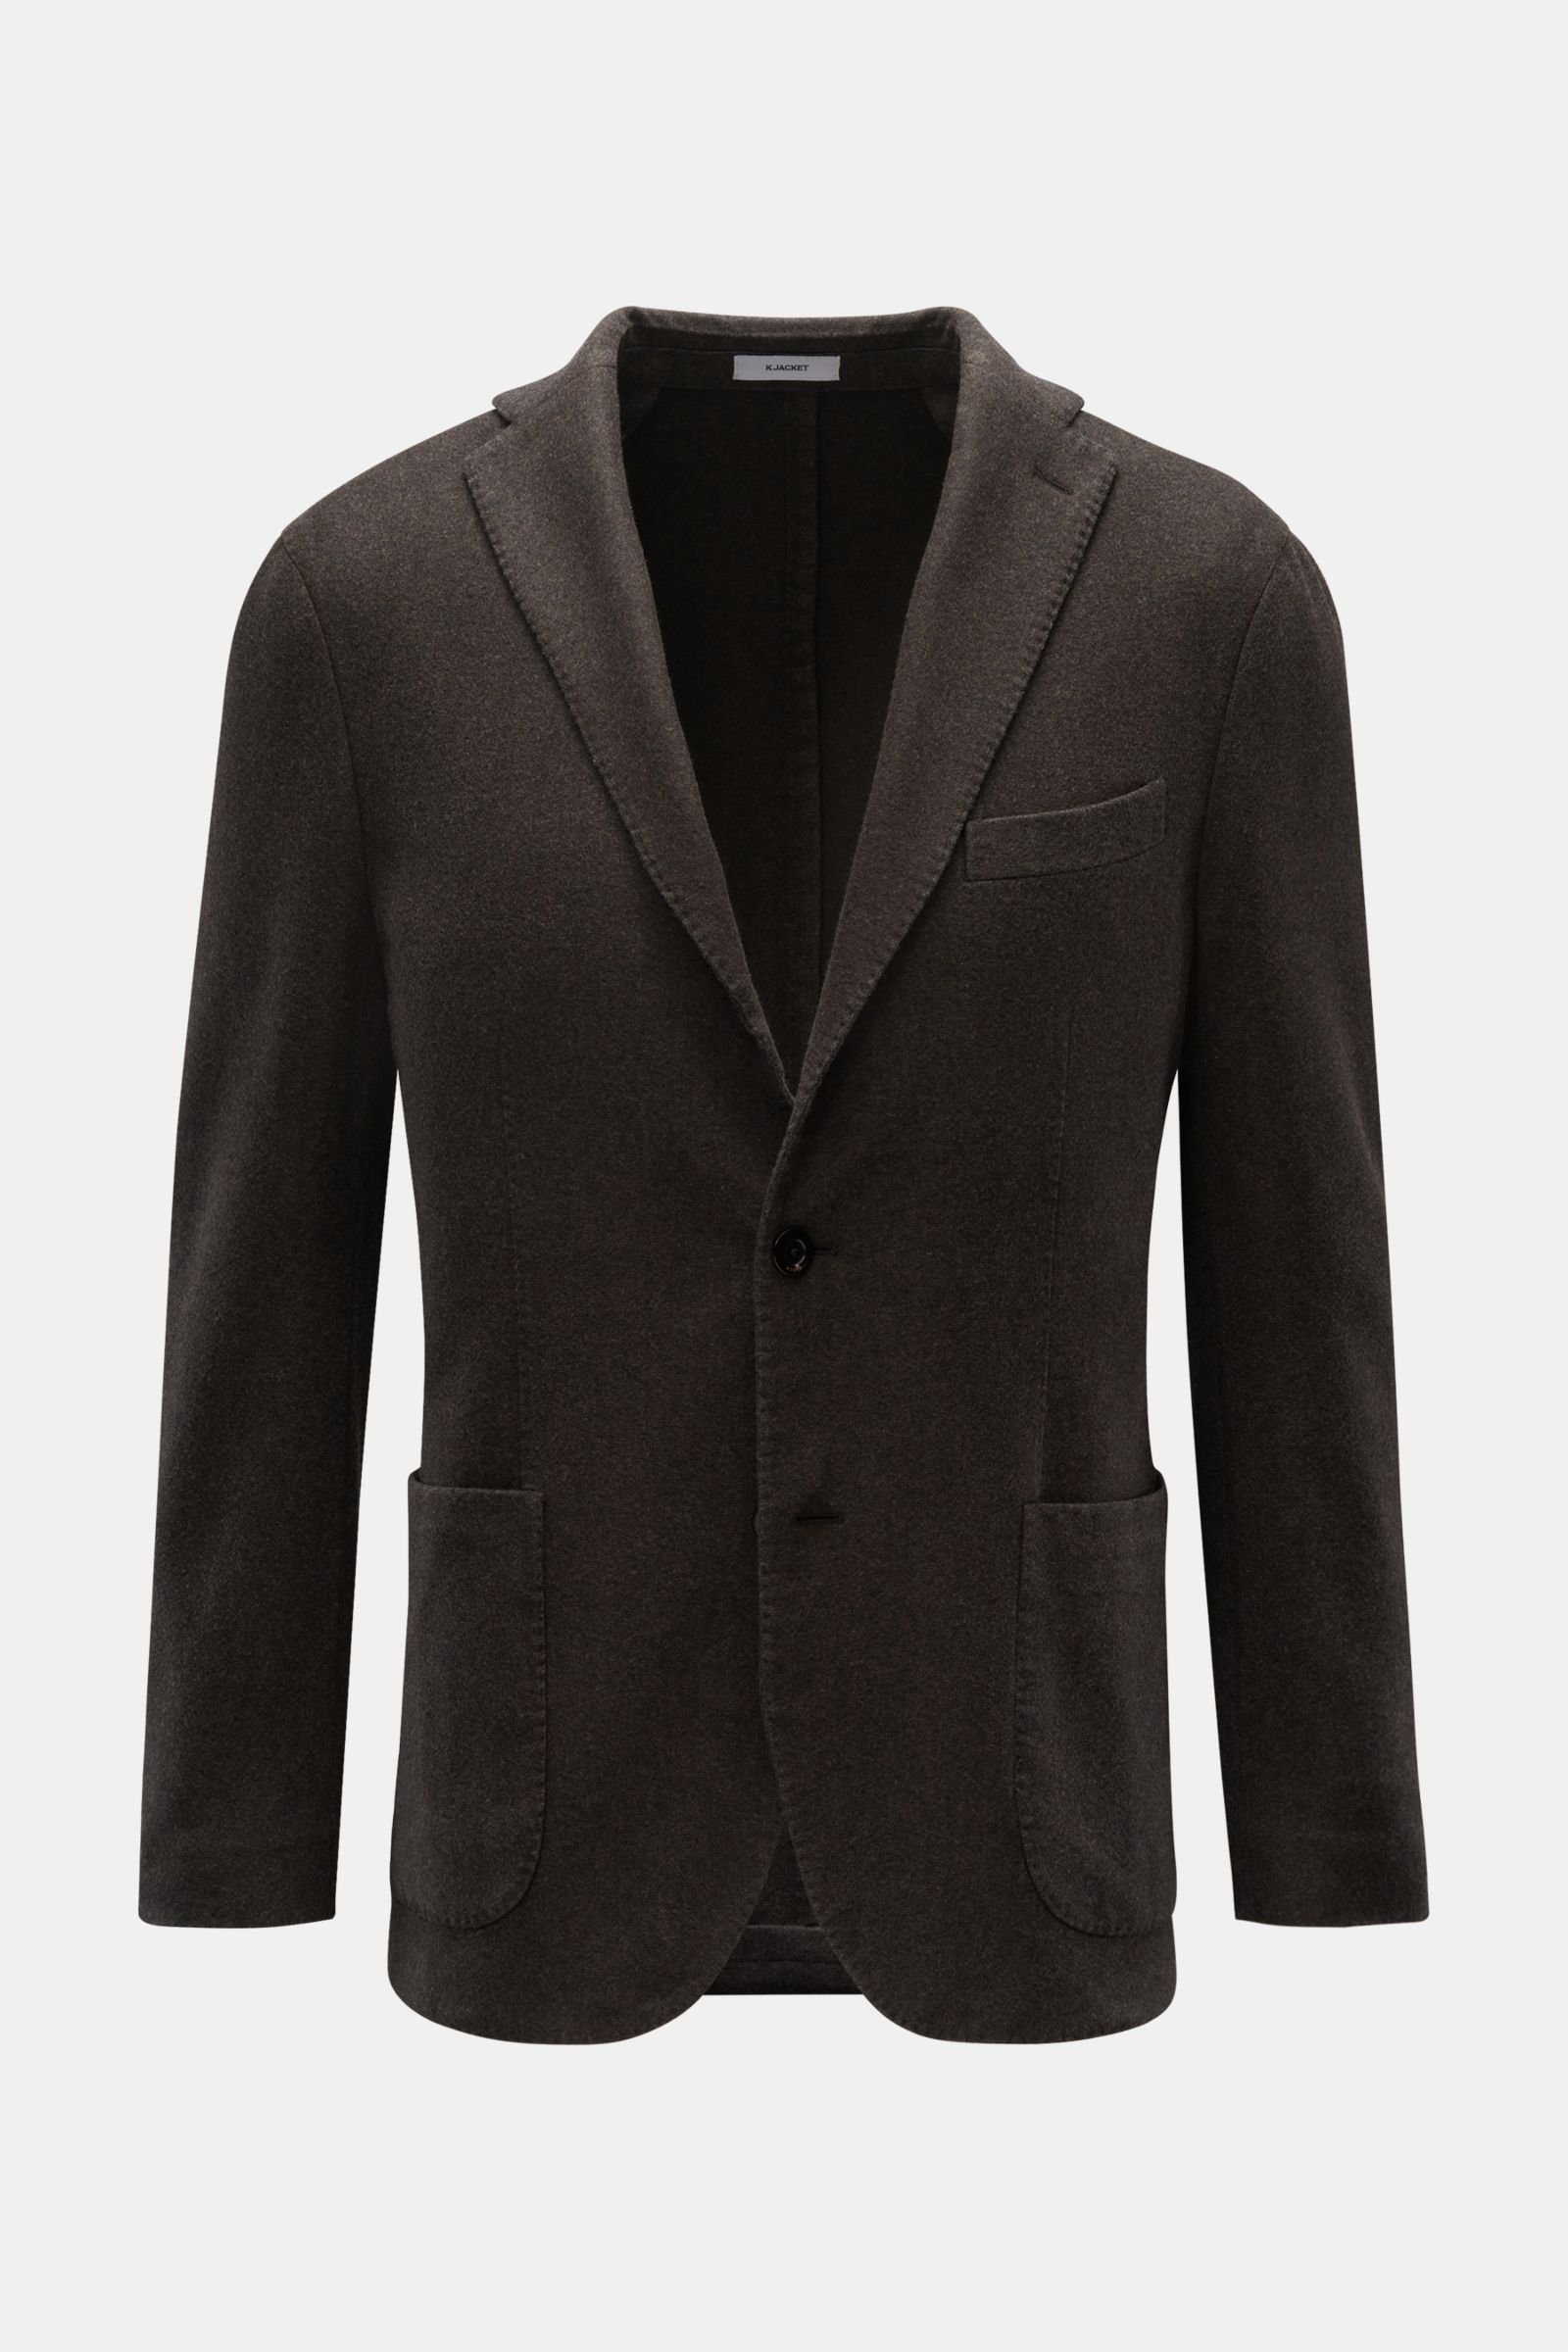 Smart-casual jacket 'K. Jacket' grey-brown